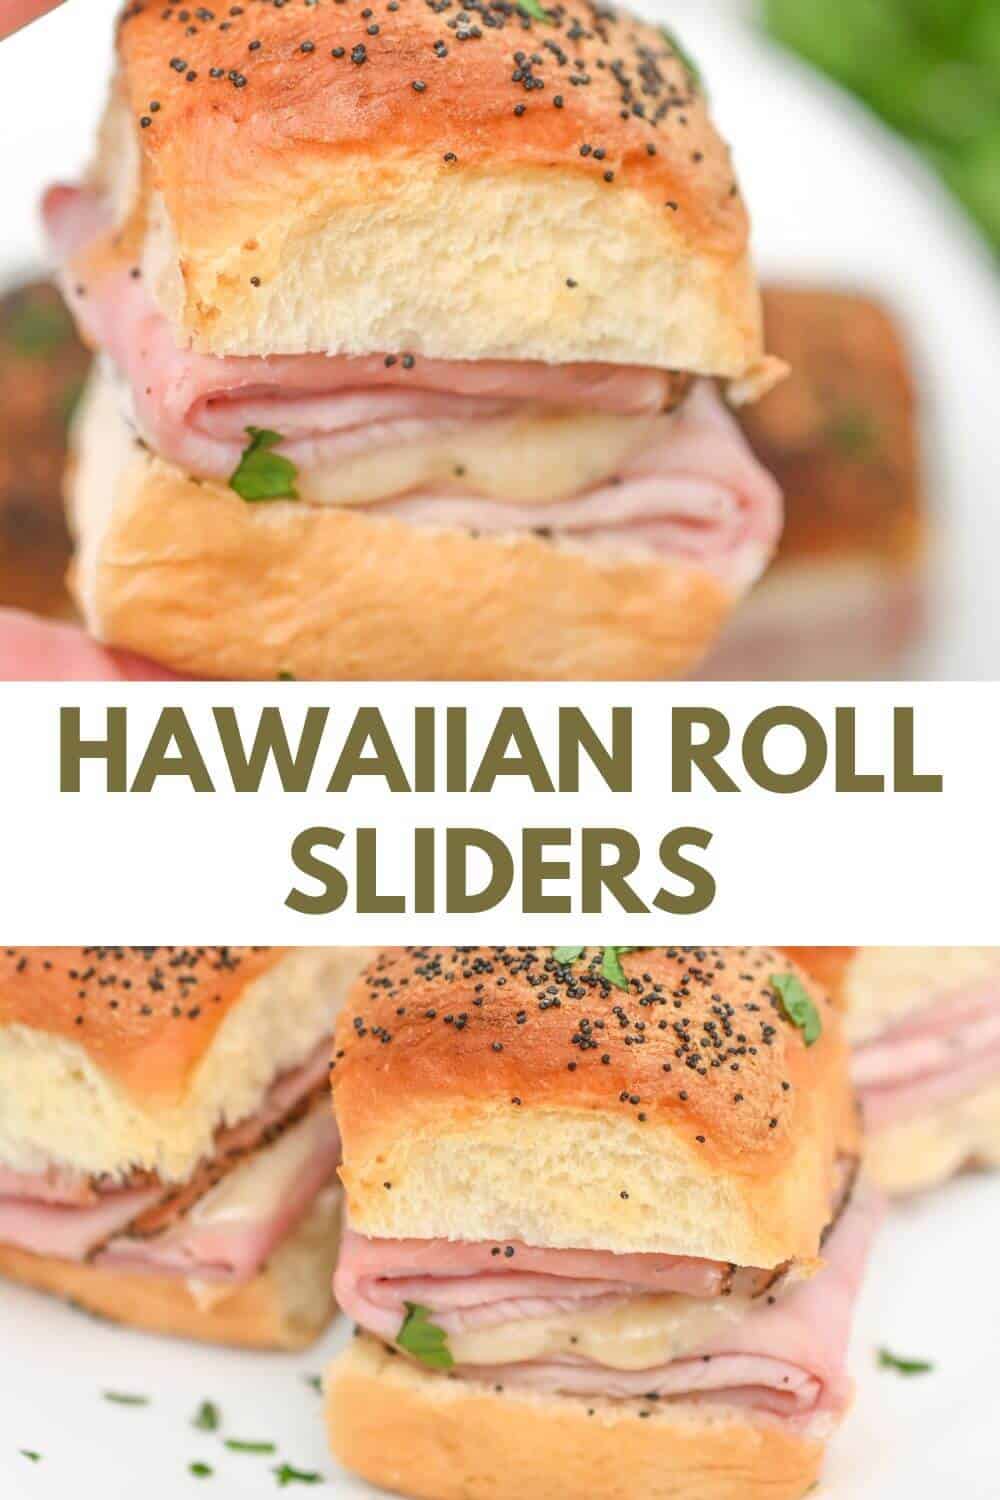 Hawaiian roll sliders on a plate.